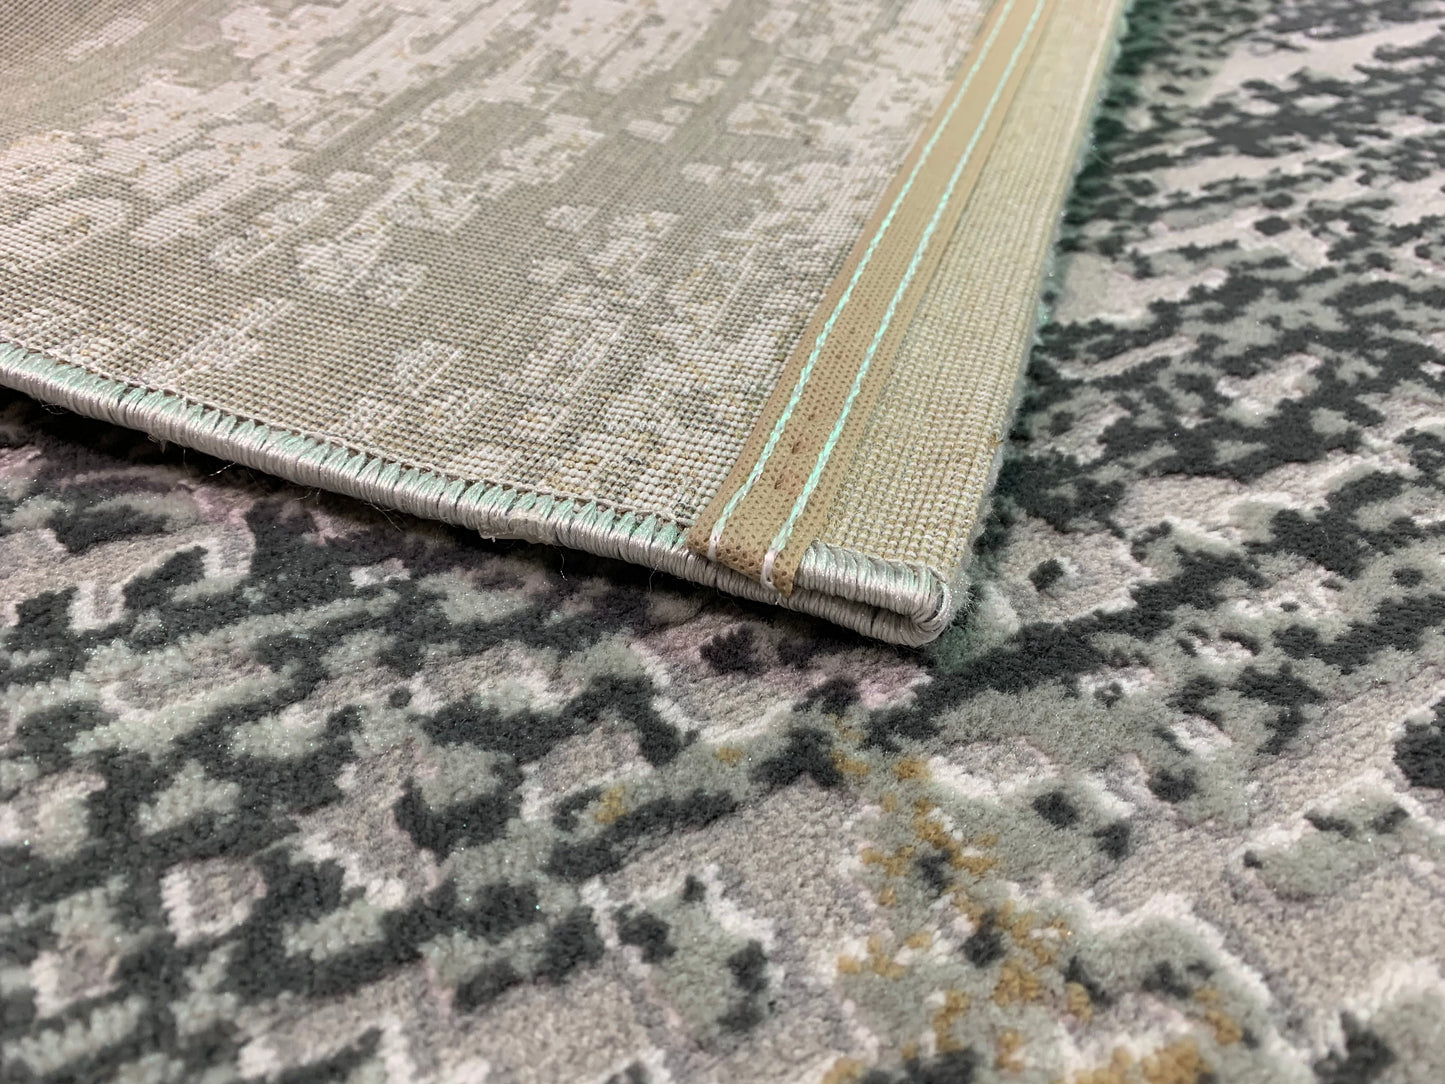 SP-201: Synthetic fiber rug